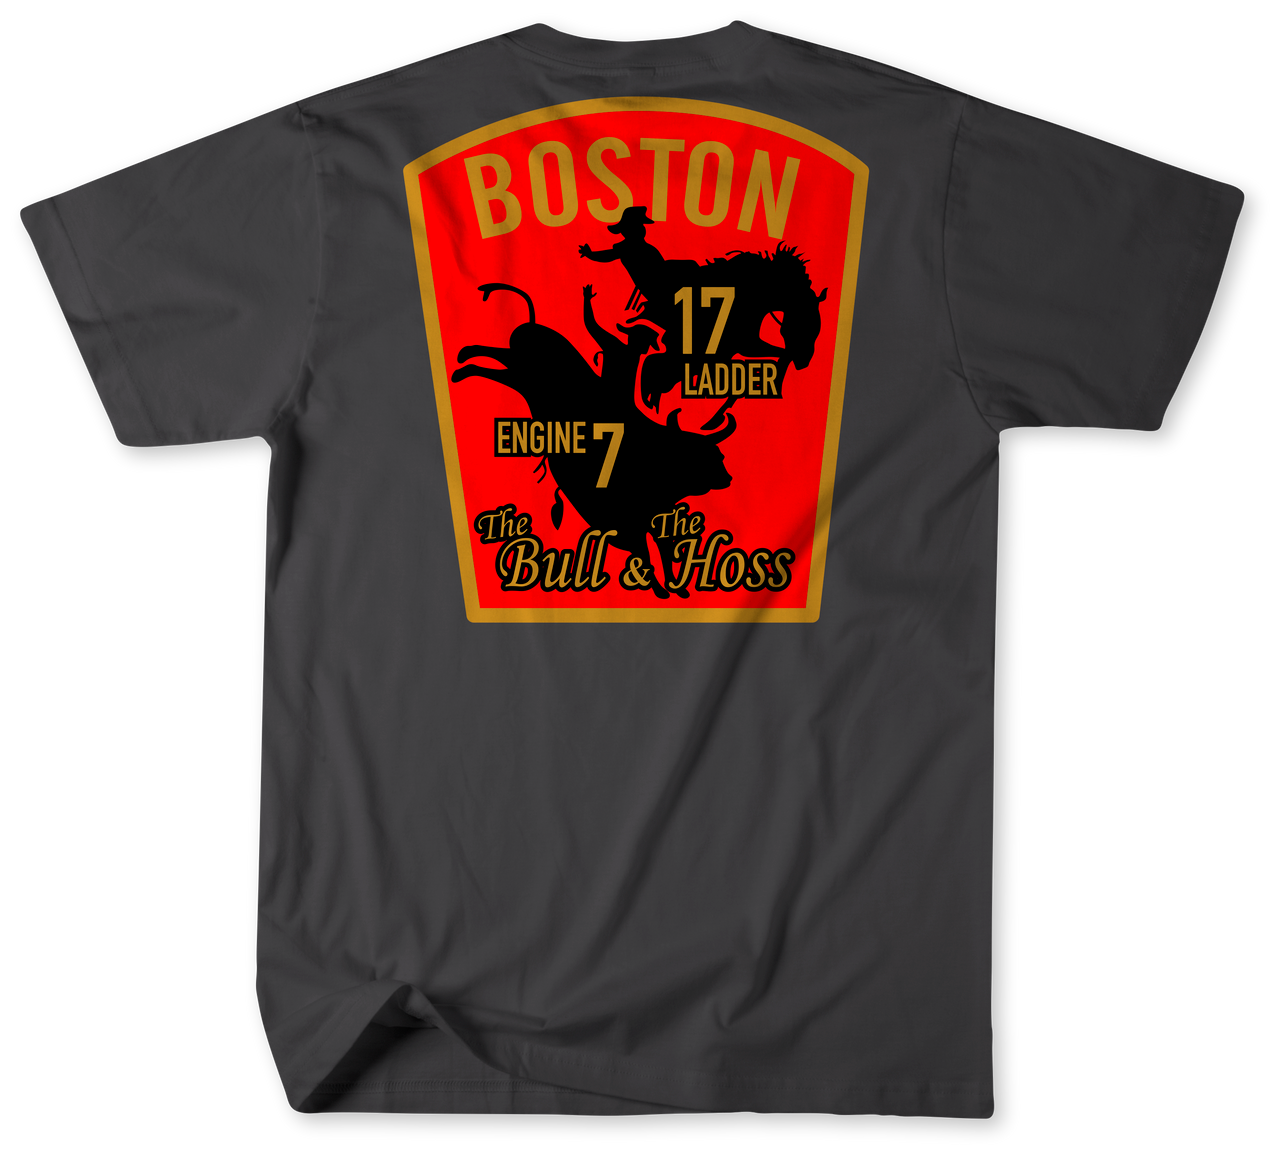 Unofficial Boston Fire Department Engine 7 Ladder 17 Shirt